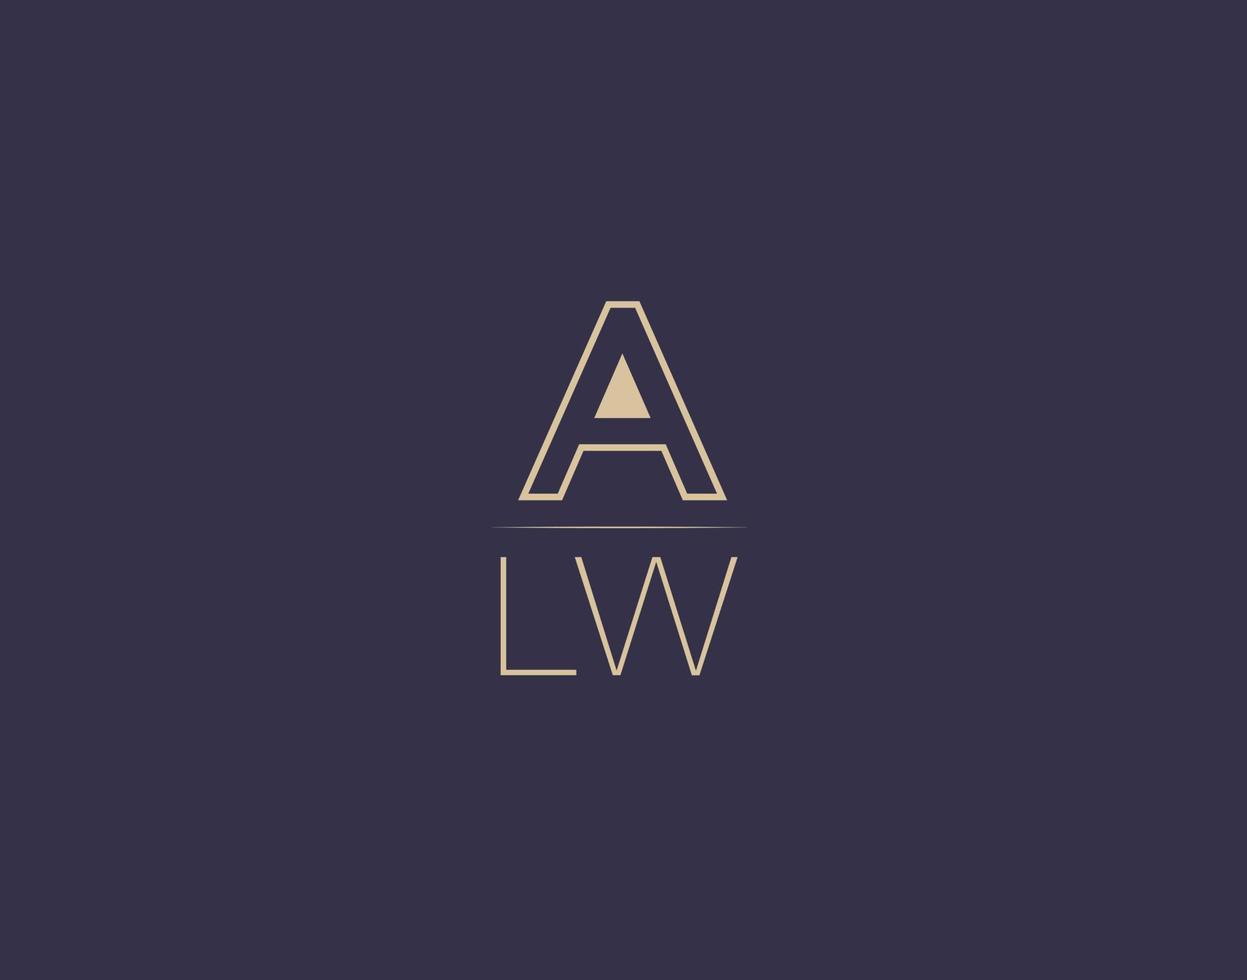 ALW letter logo design modern minimalist vector images